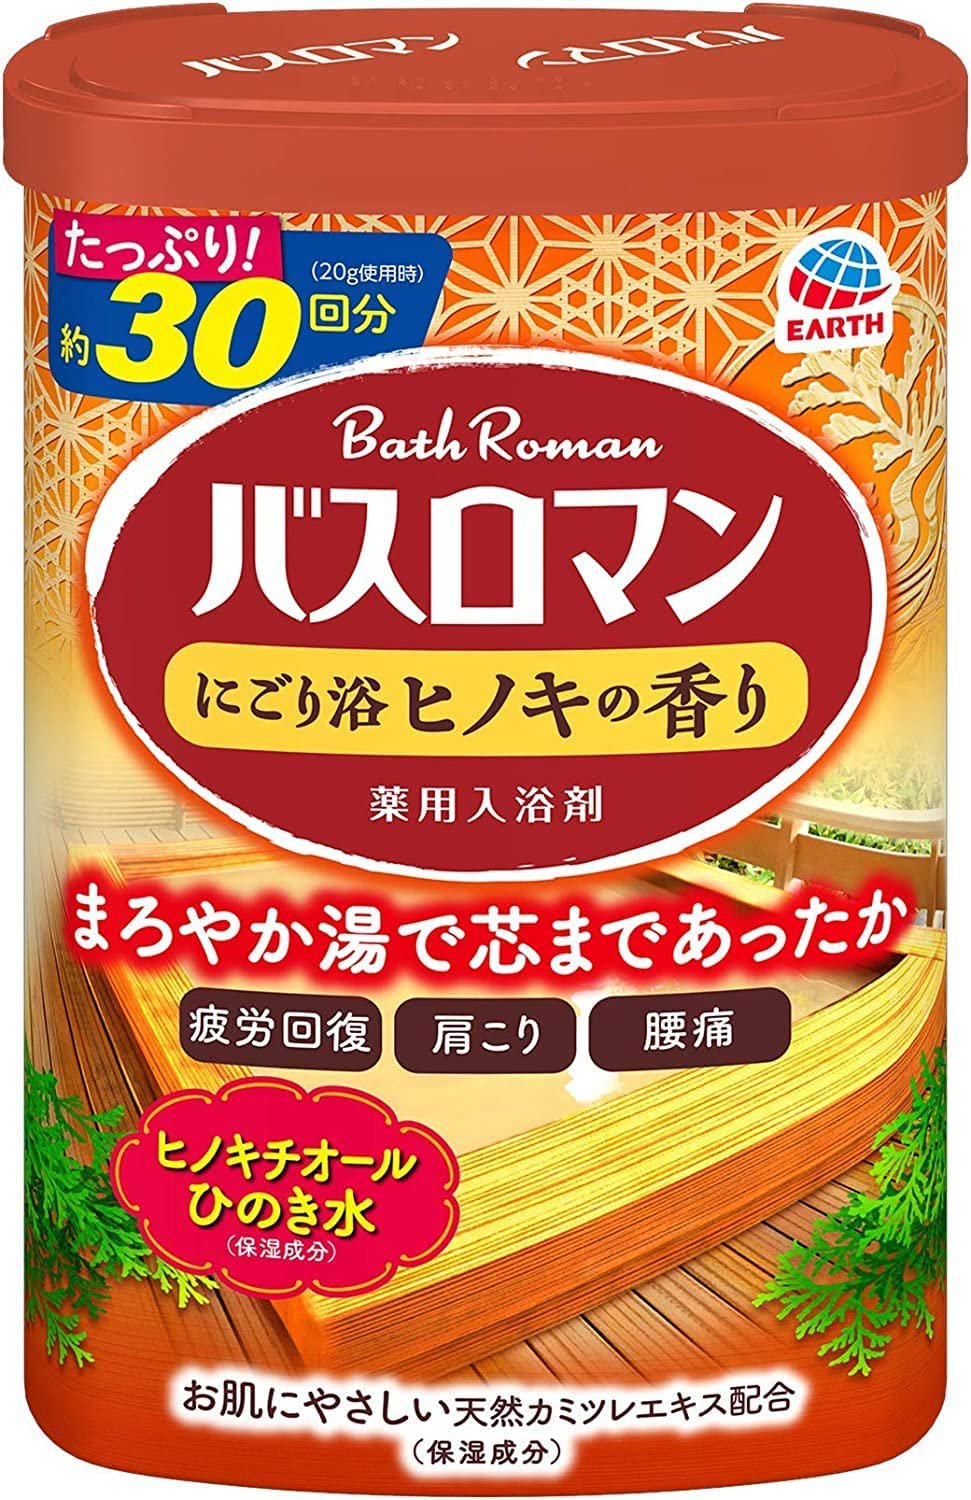 Japanese Bath Salt Samurai Bath Roman Hot Spring Onsen Powder Scent of Cypress 600ggift suggestion